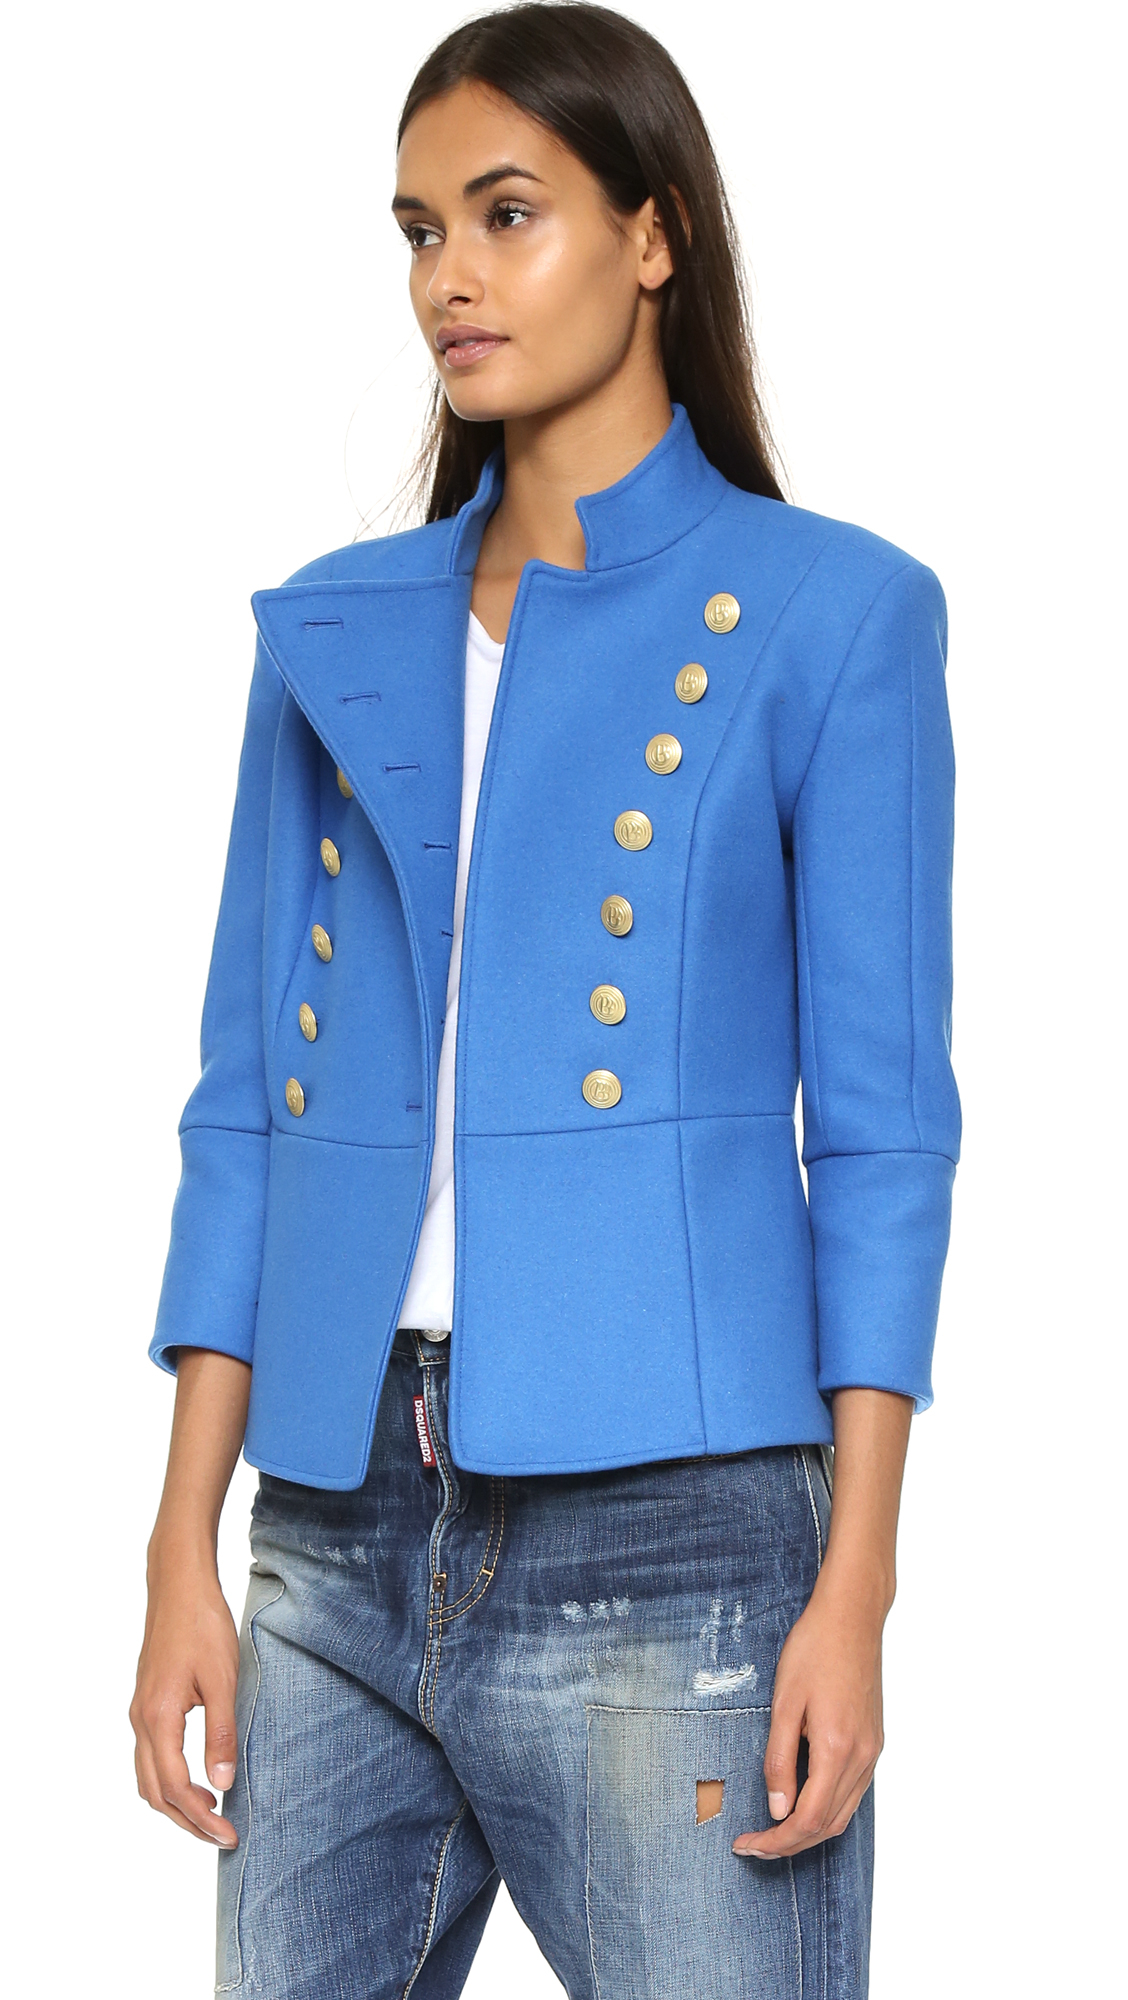 blue military jacket womens